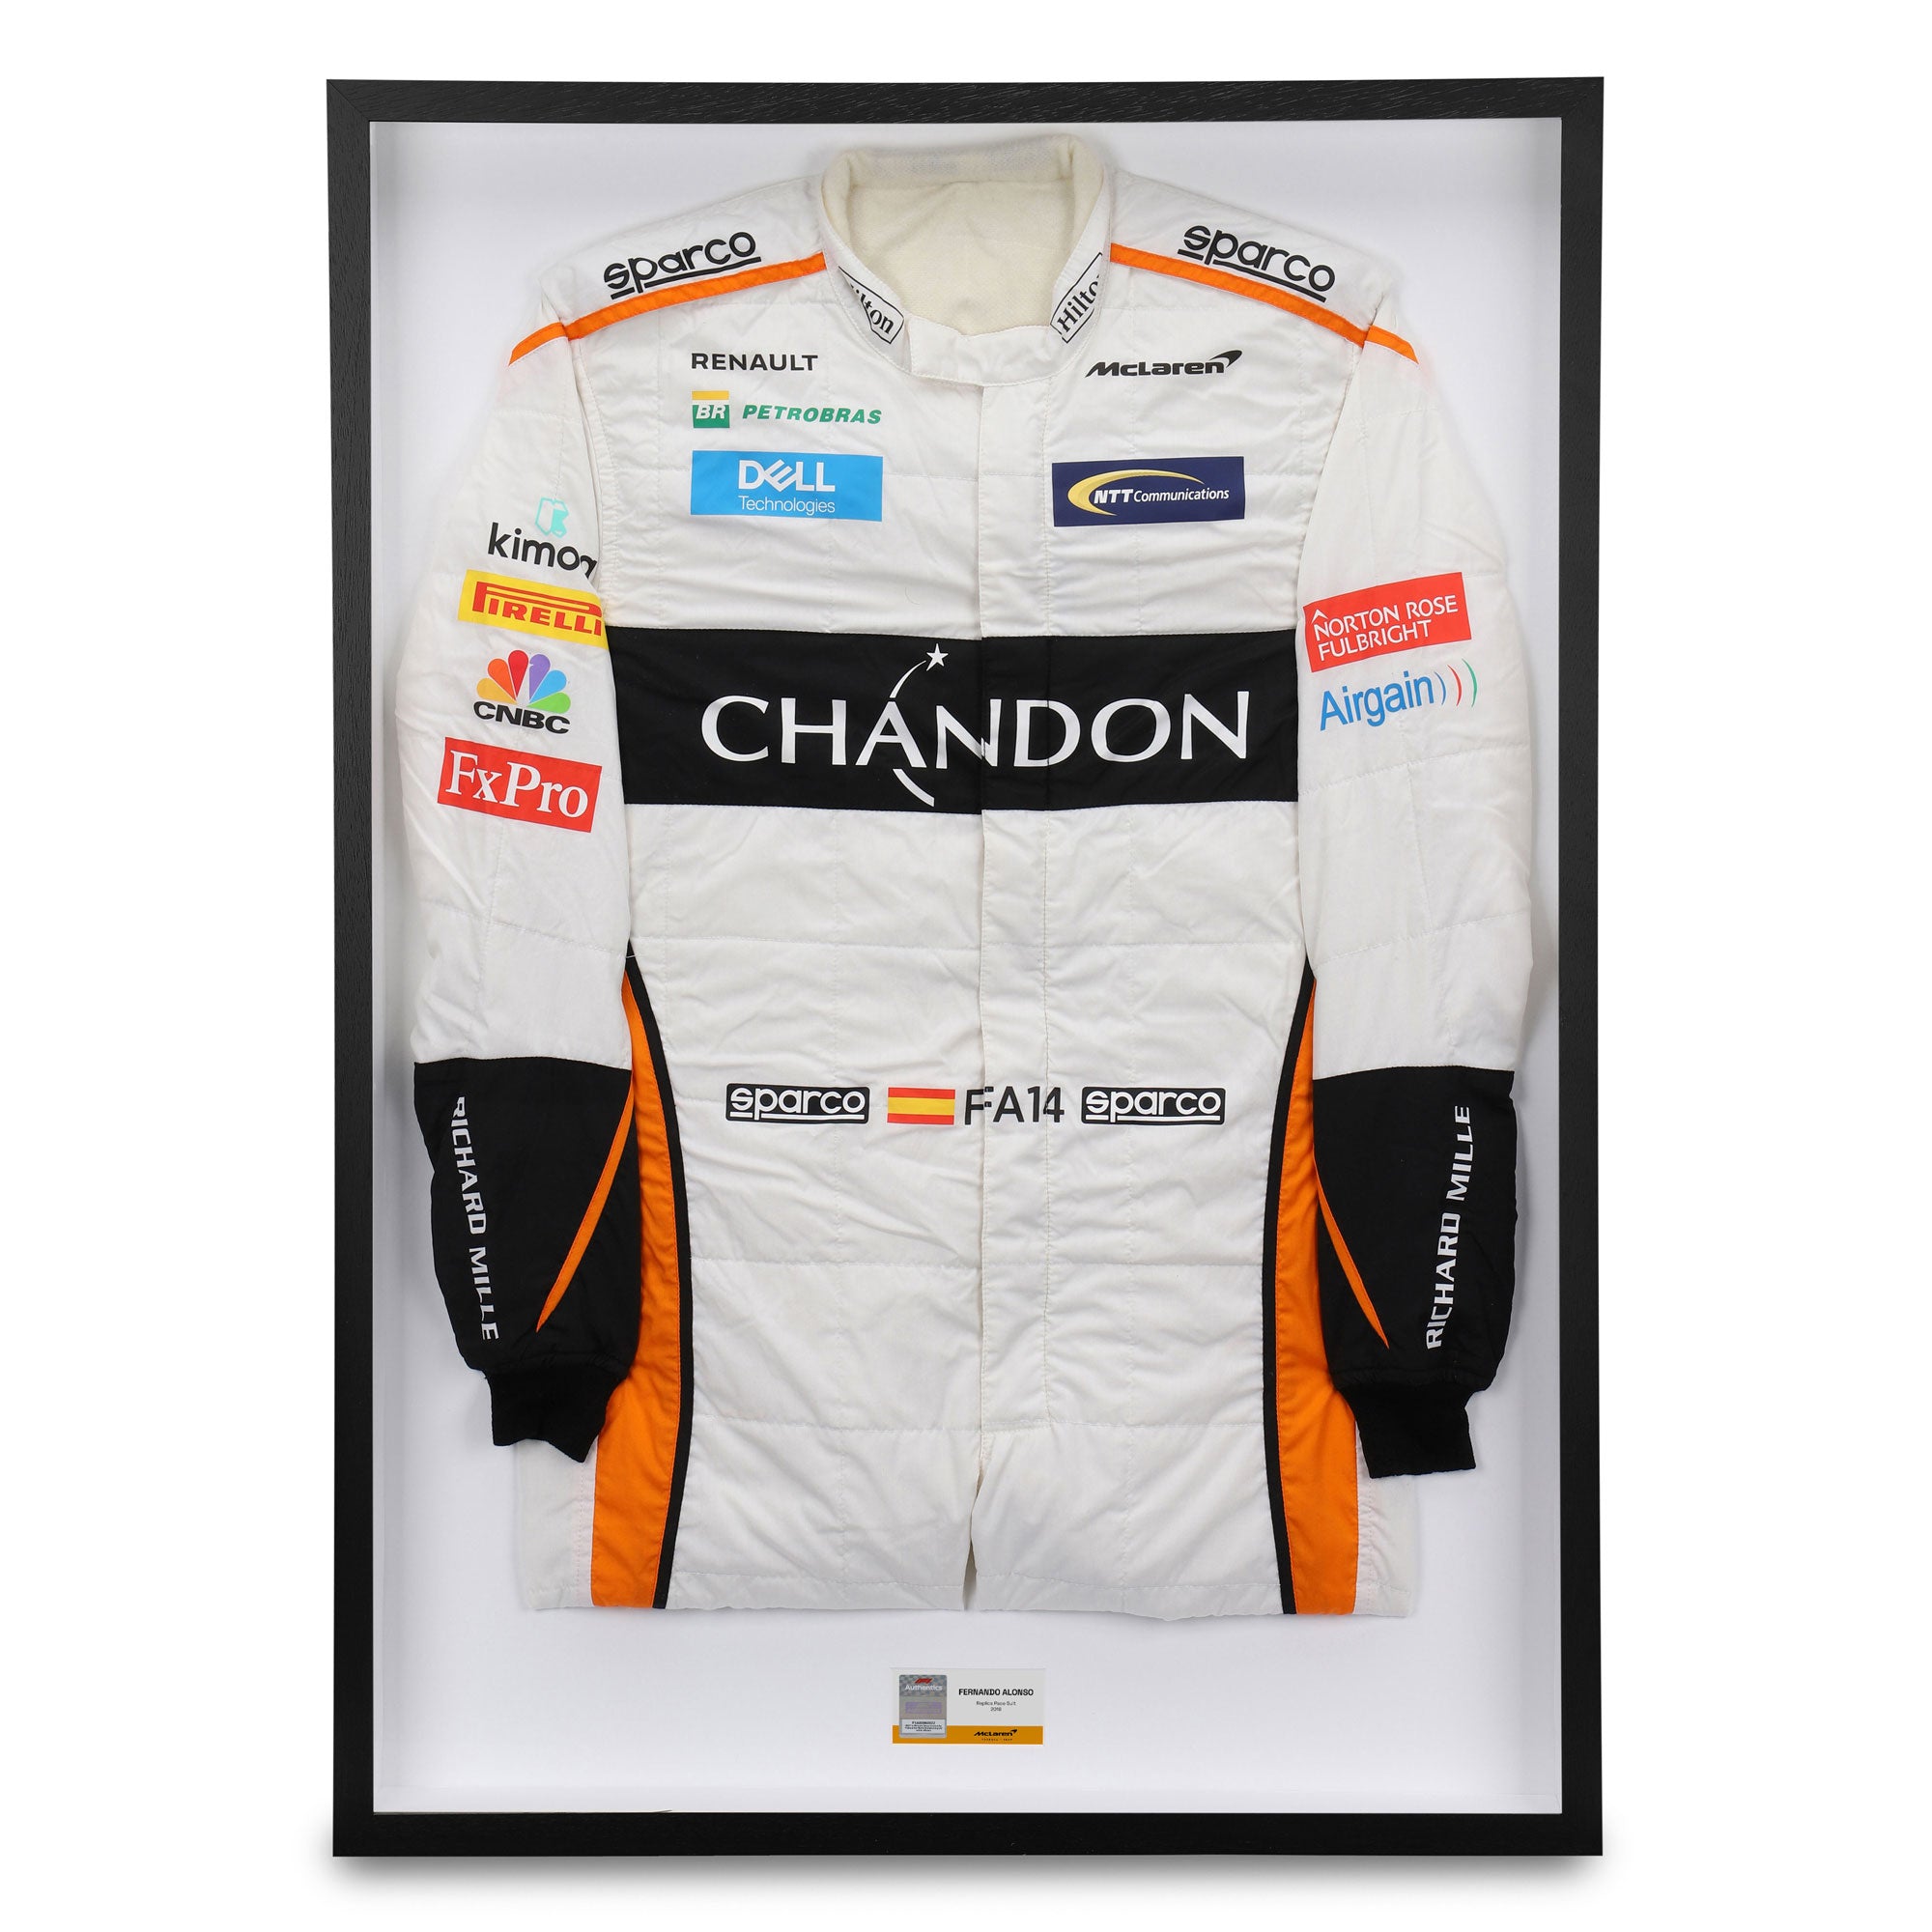 Fernando Alonso 2018 Replica McLaren F1 Team Race Suit with Chandon Letter Branding